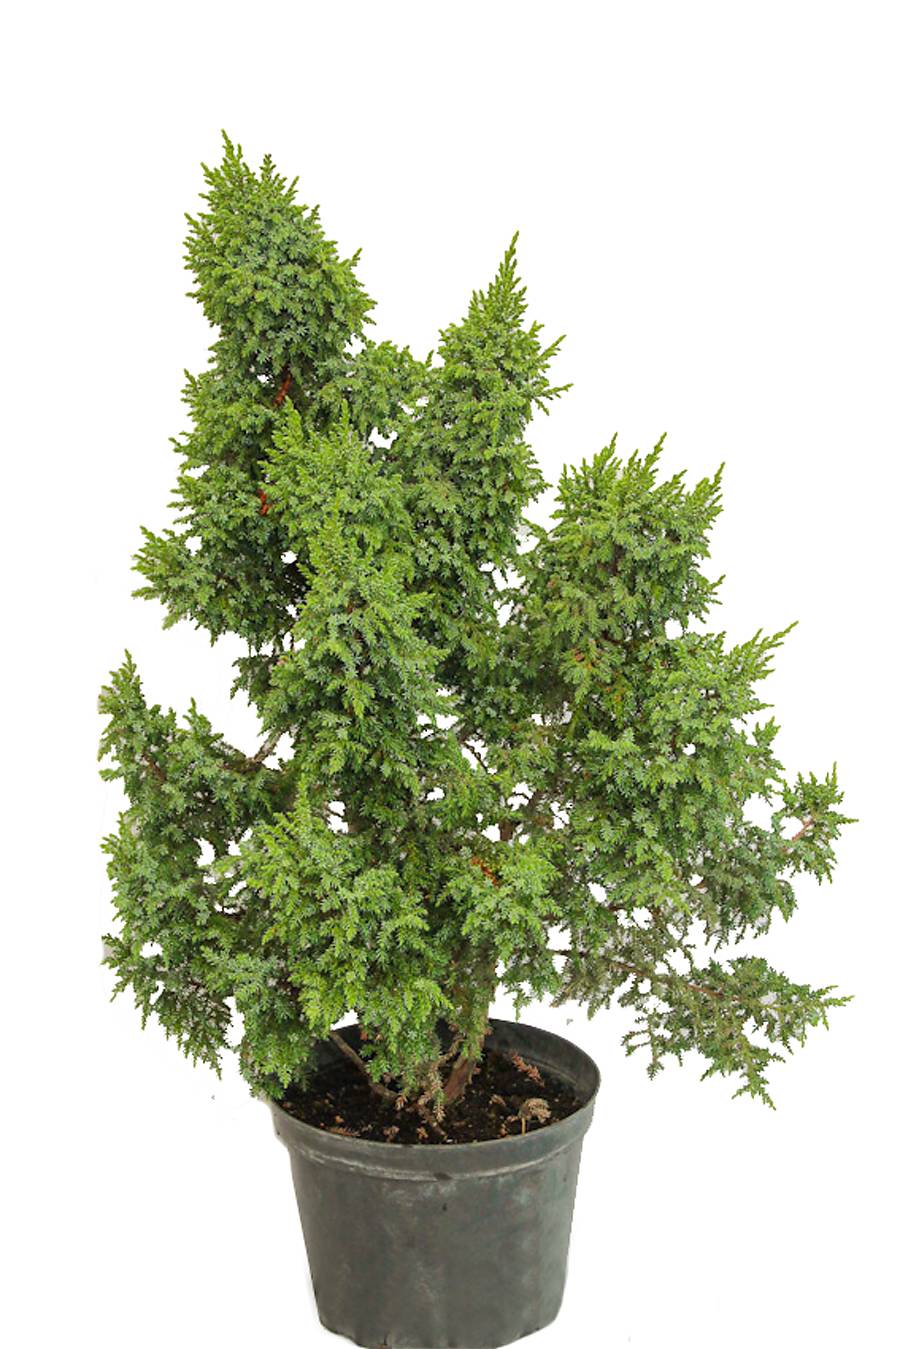 Пингии Лодери можжевельник (Juniperus pingii 'Loderi') D13 H30